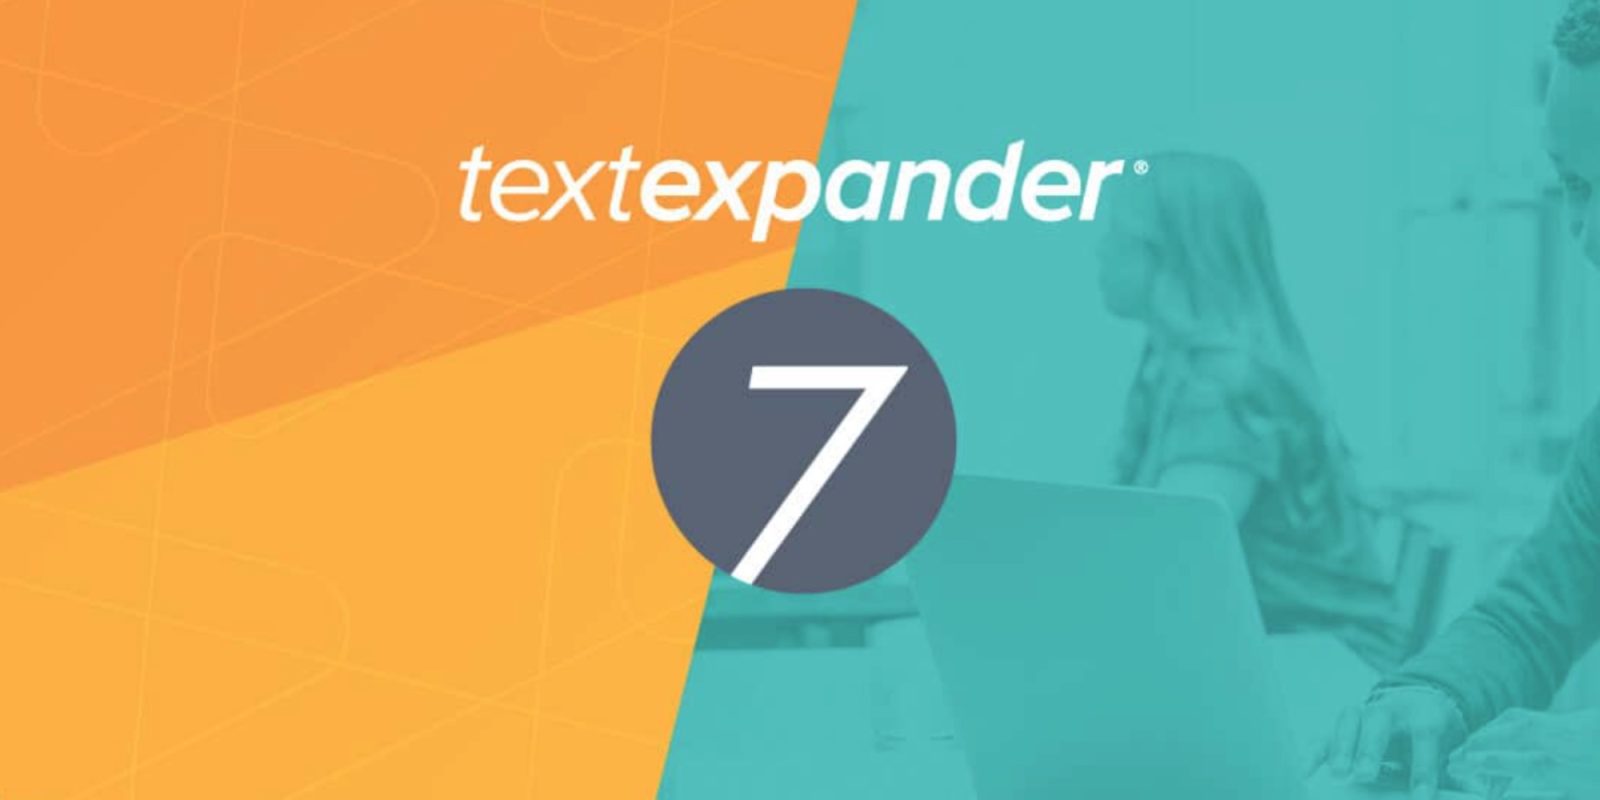 textexpander-7-9to5mac